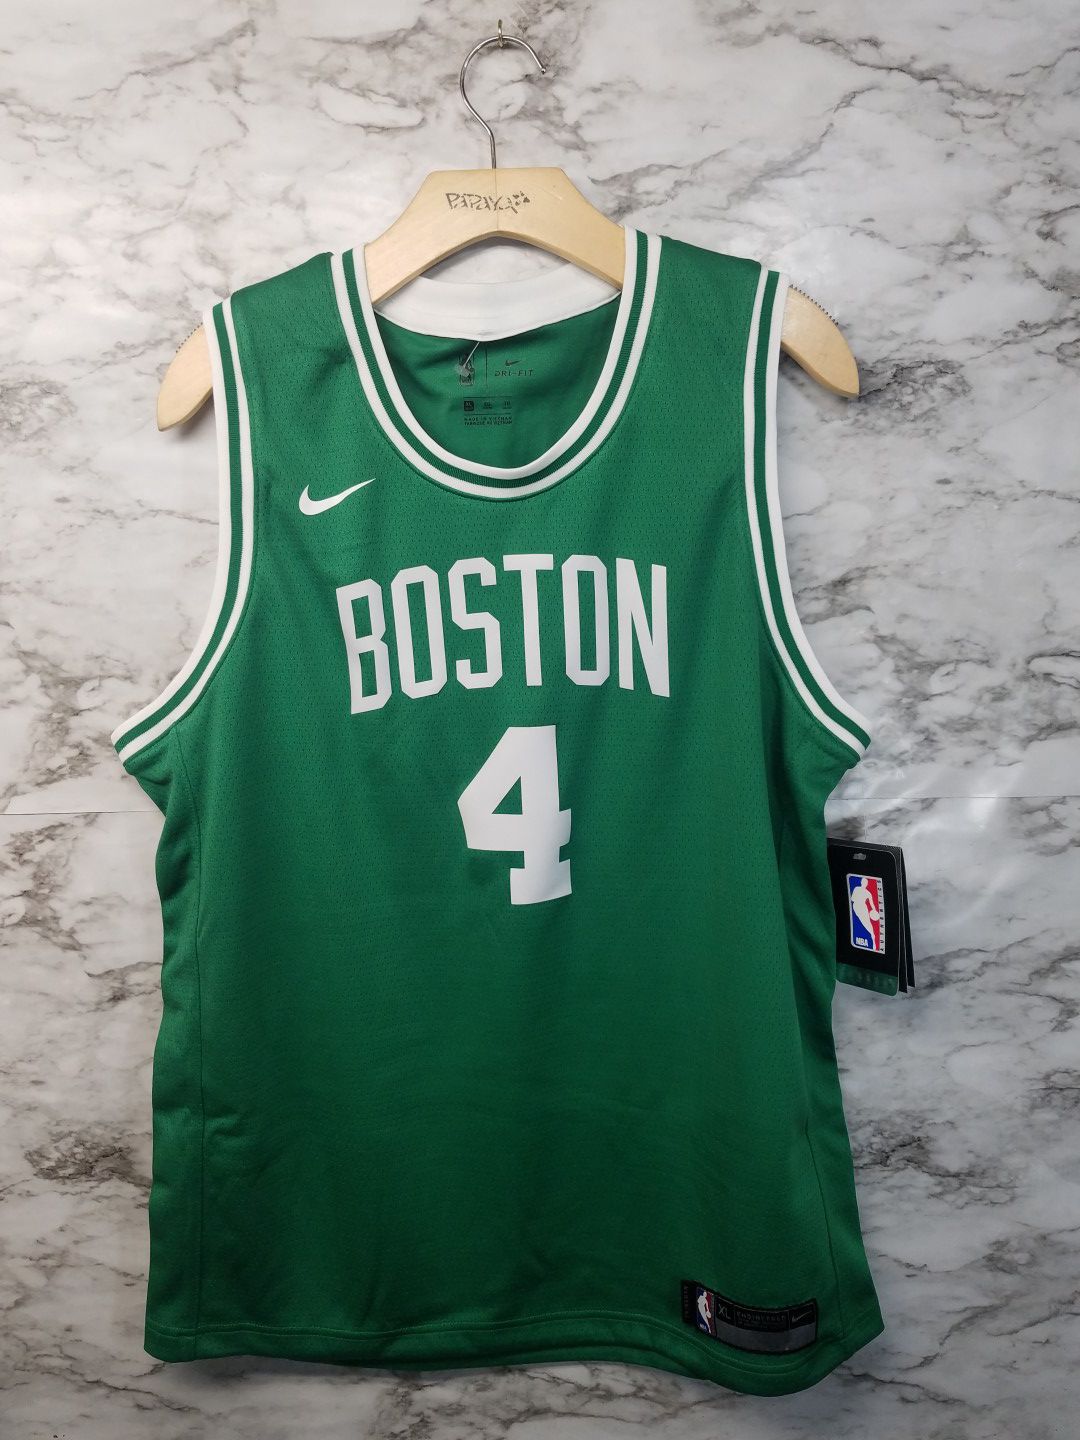 Nike Boston Celtics Youth Jersey Sz L New with tags YL #4 THOMAS